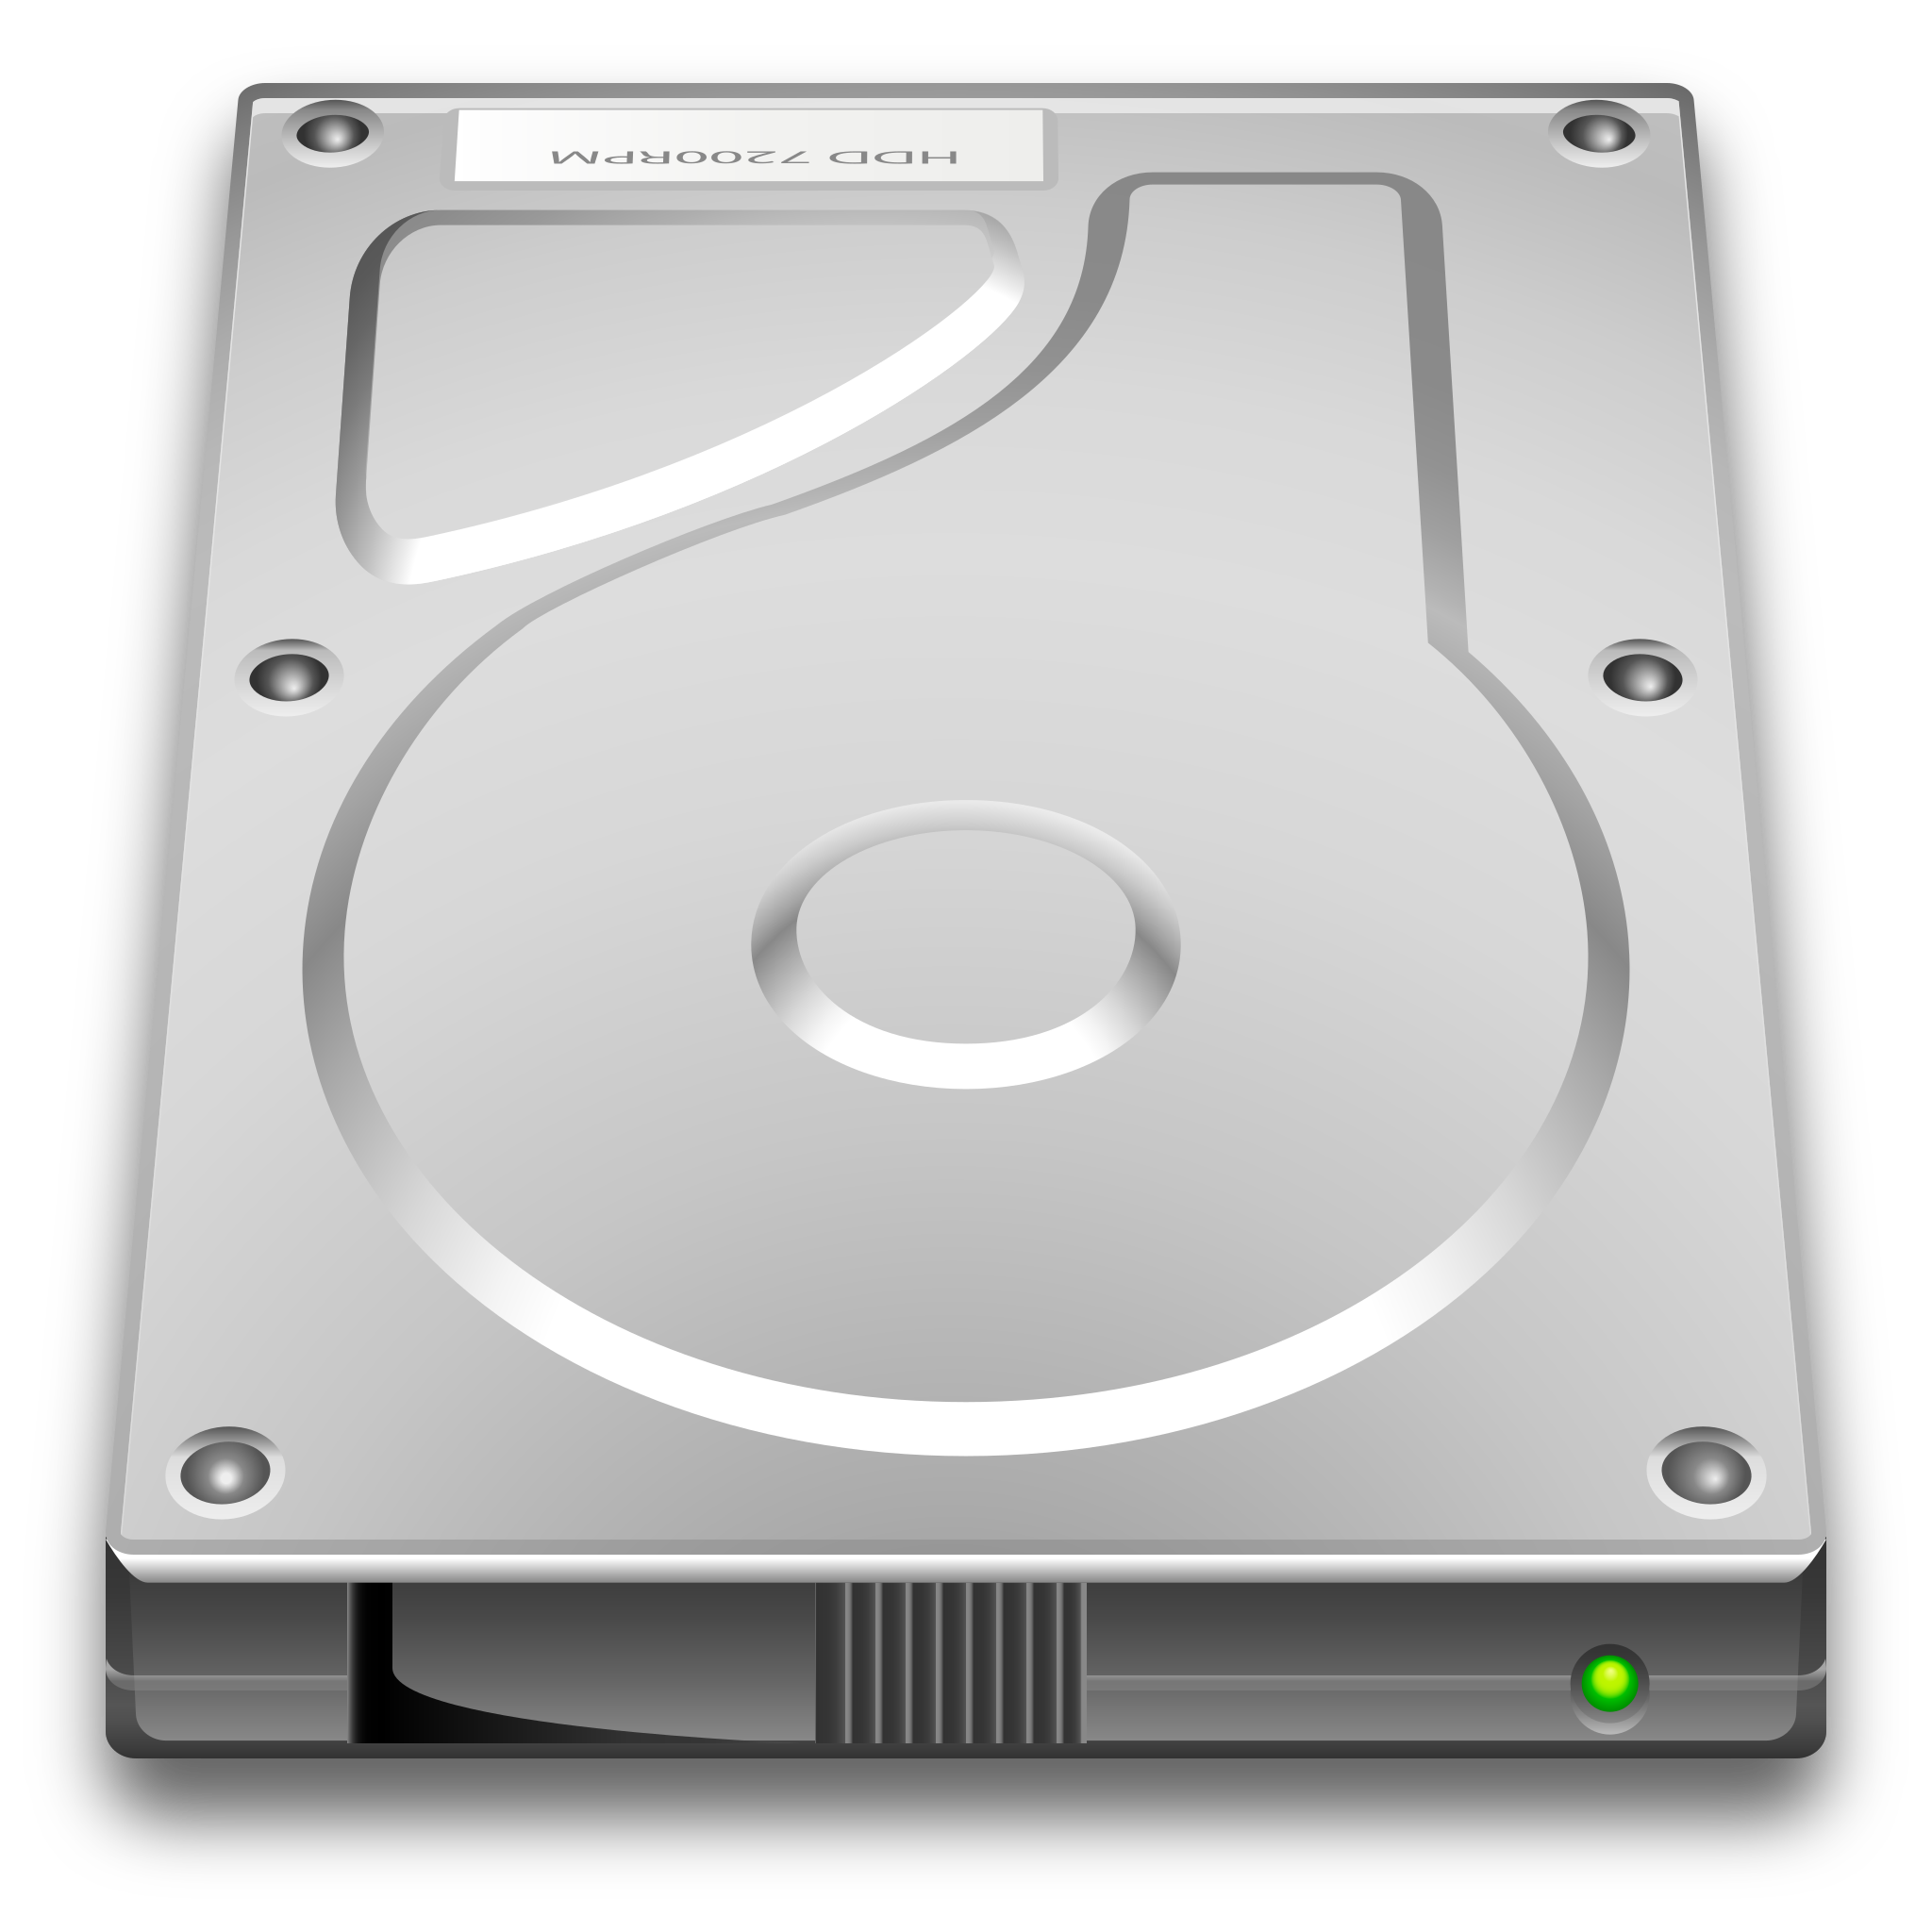 Hard drive icon or storage device icon.